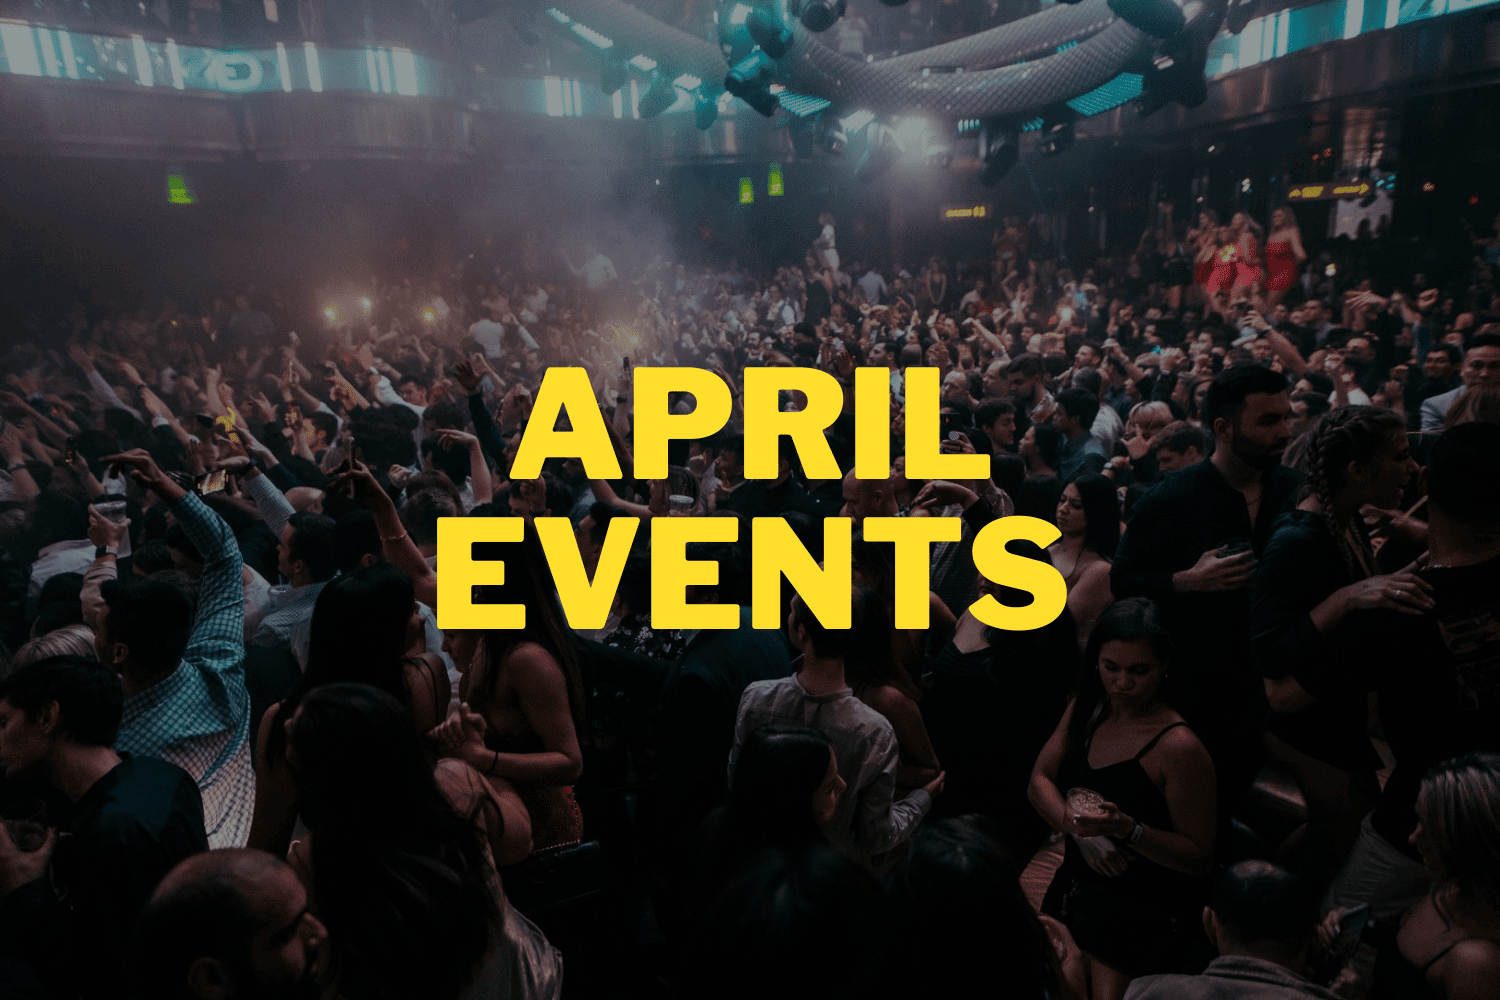 Las Vegas Club Events april